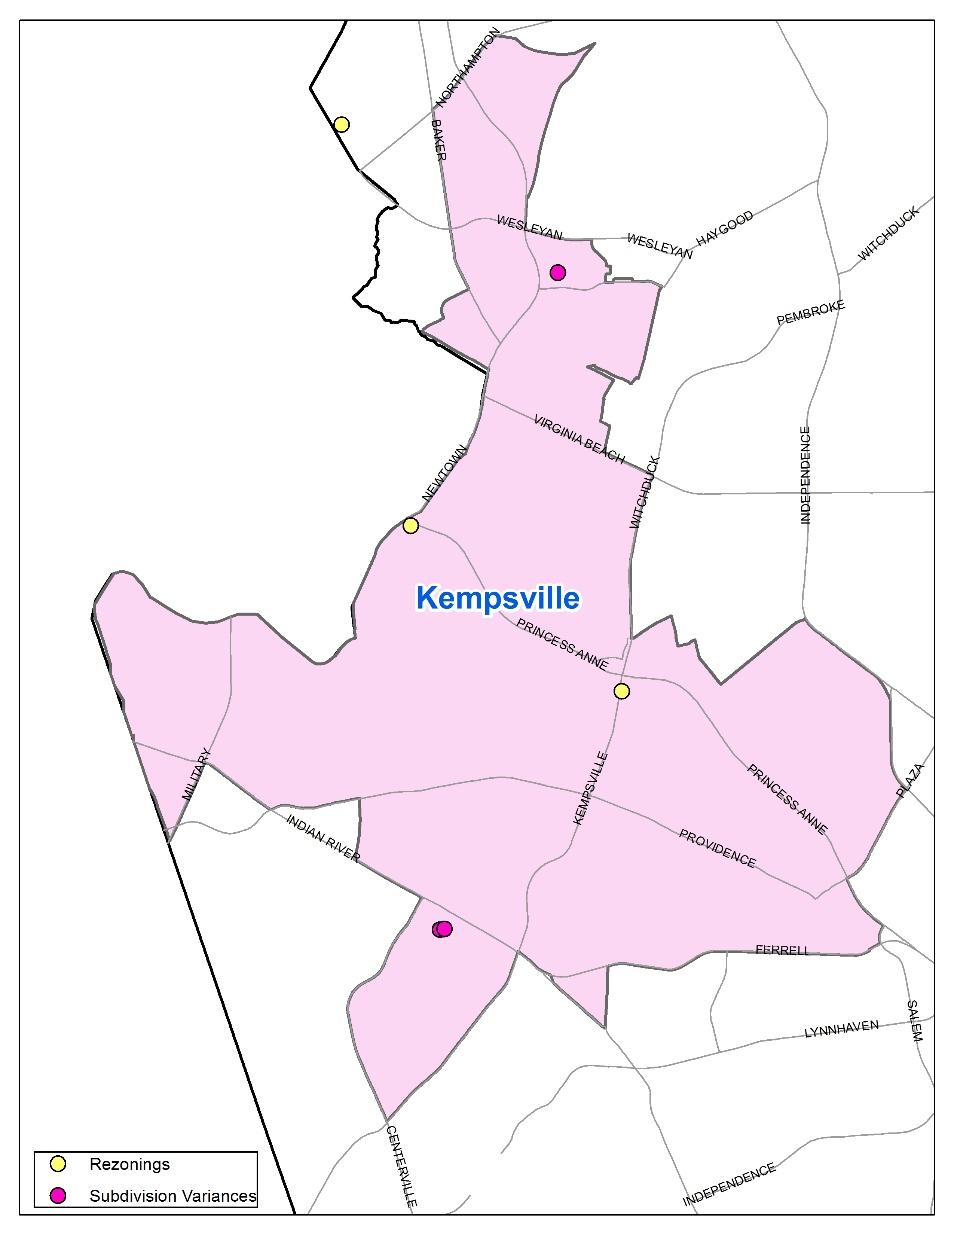 Kempsville 4 Subdivision Variances 3 Dimensional